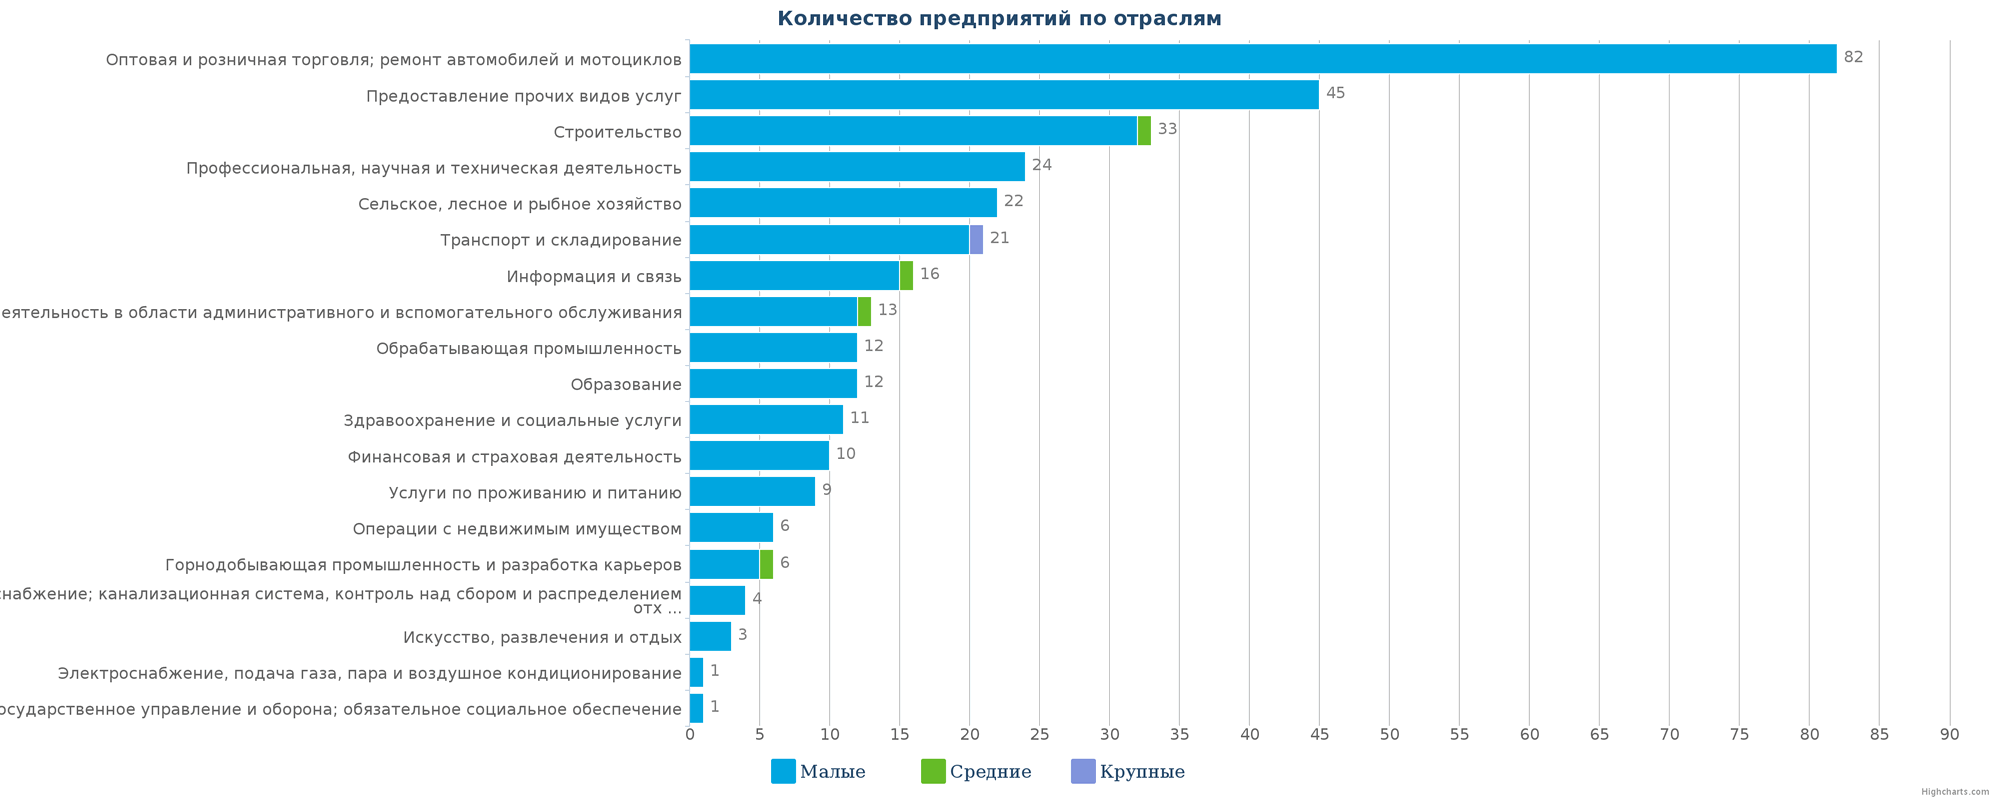 Новые предприятия в каталоге Казахстана